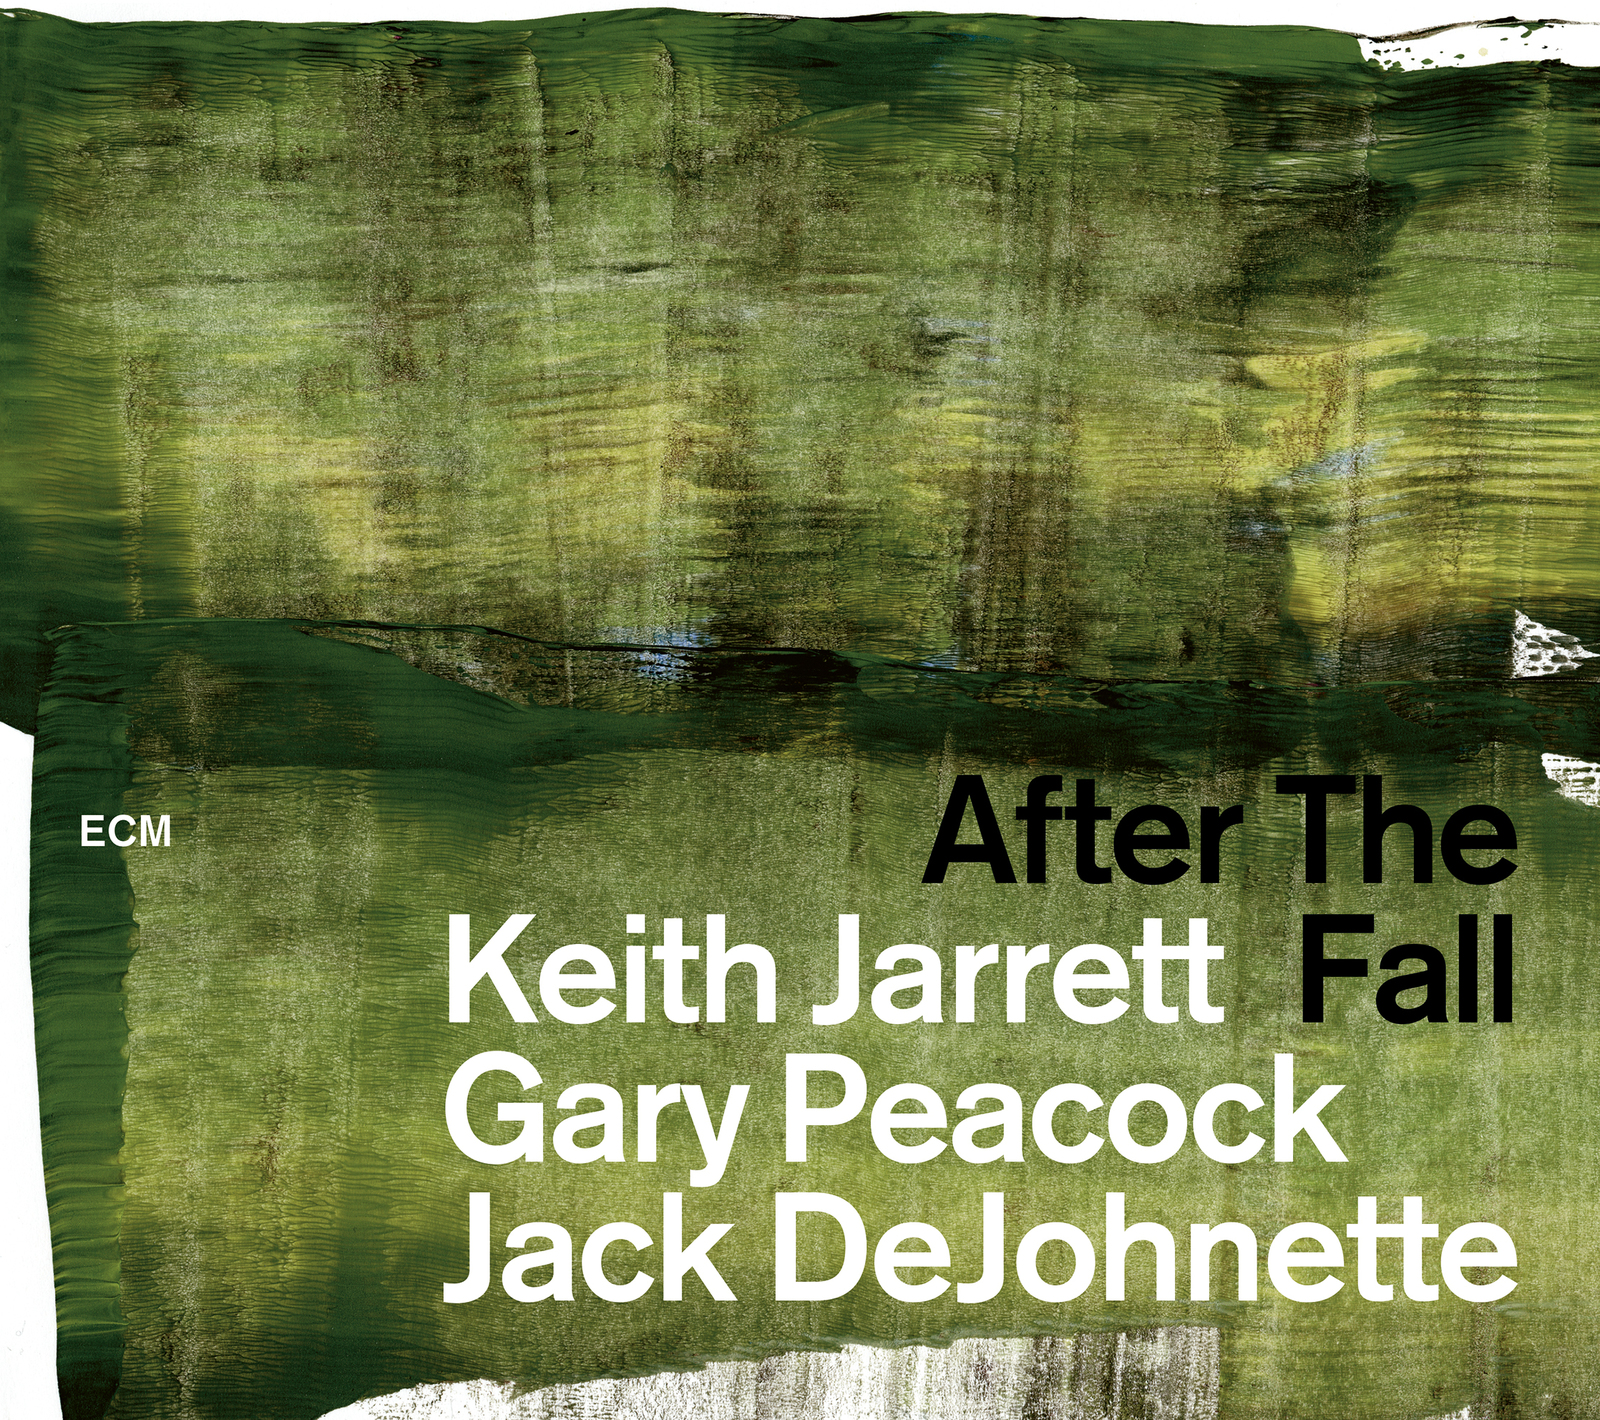 Keith Jarrett, Gary Peacock, Jack DeJohnette, After the Fall, ECM, CD